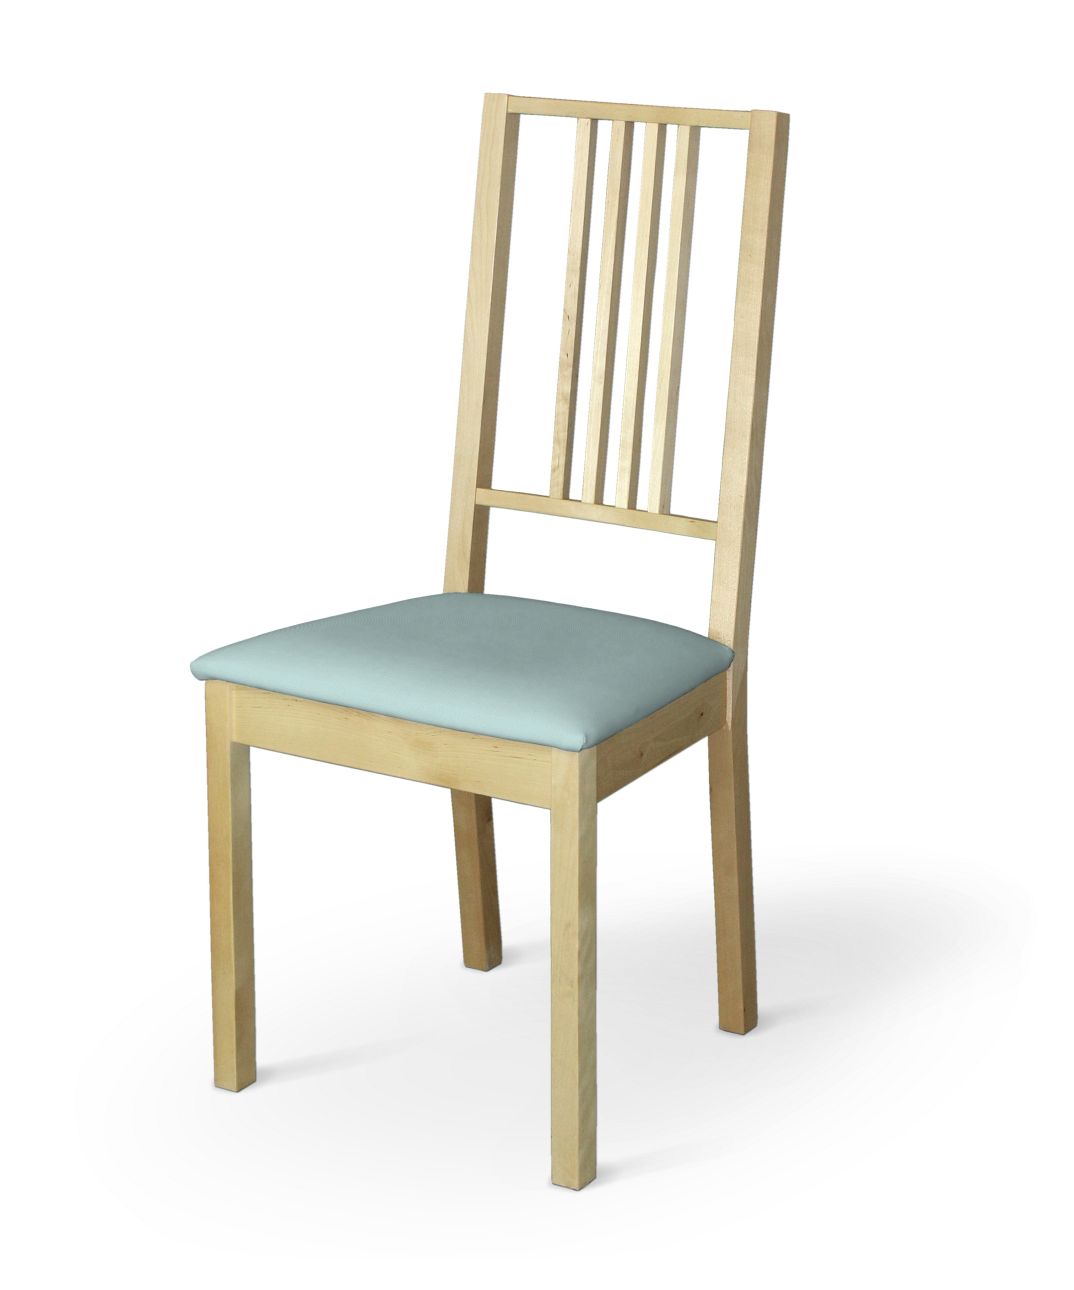 Dekoria Potah na sedák židle Börje, pastelově blankytná , potah sedák židle Börje, Cotton Panama, 702-10